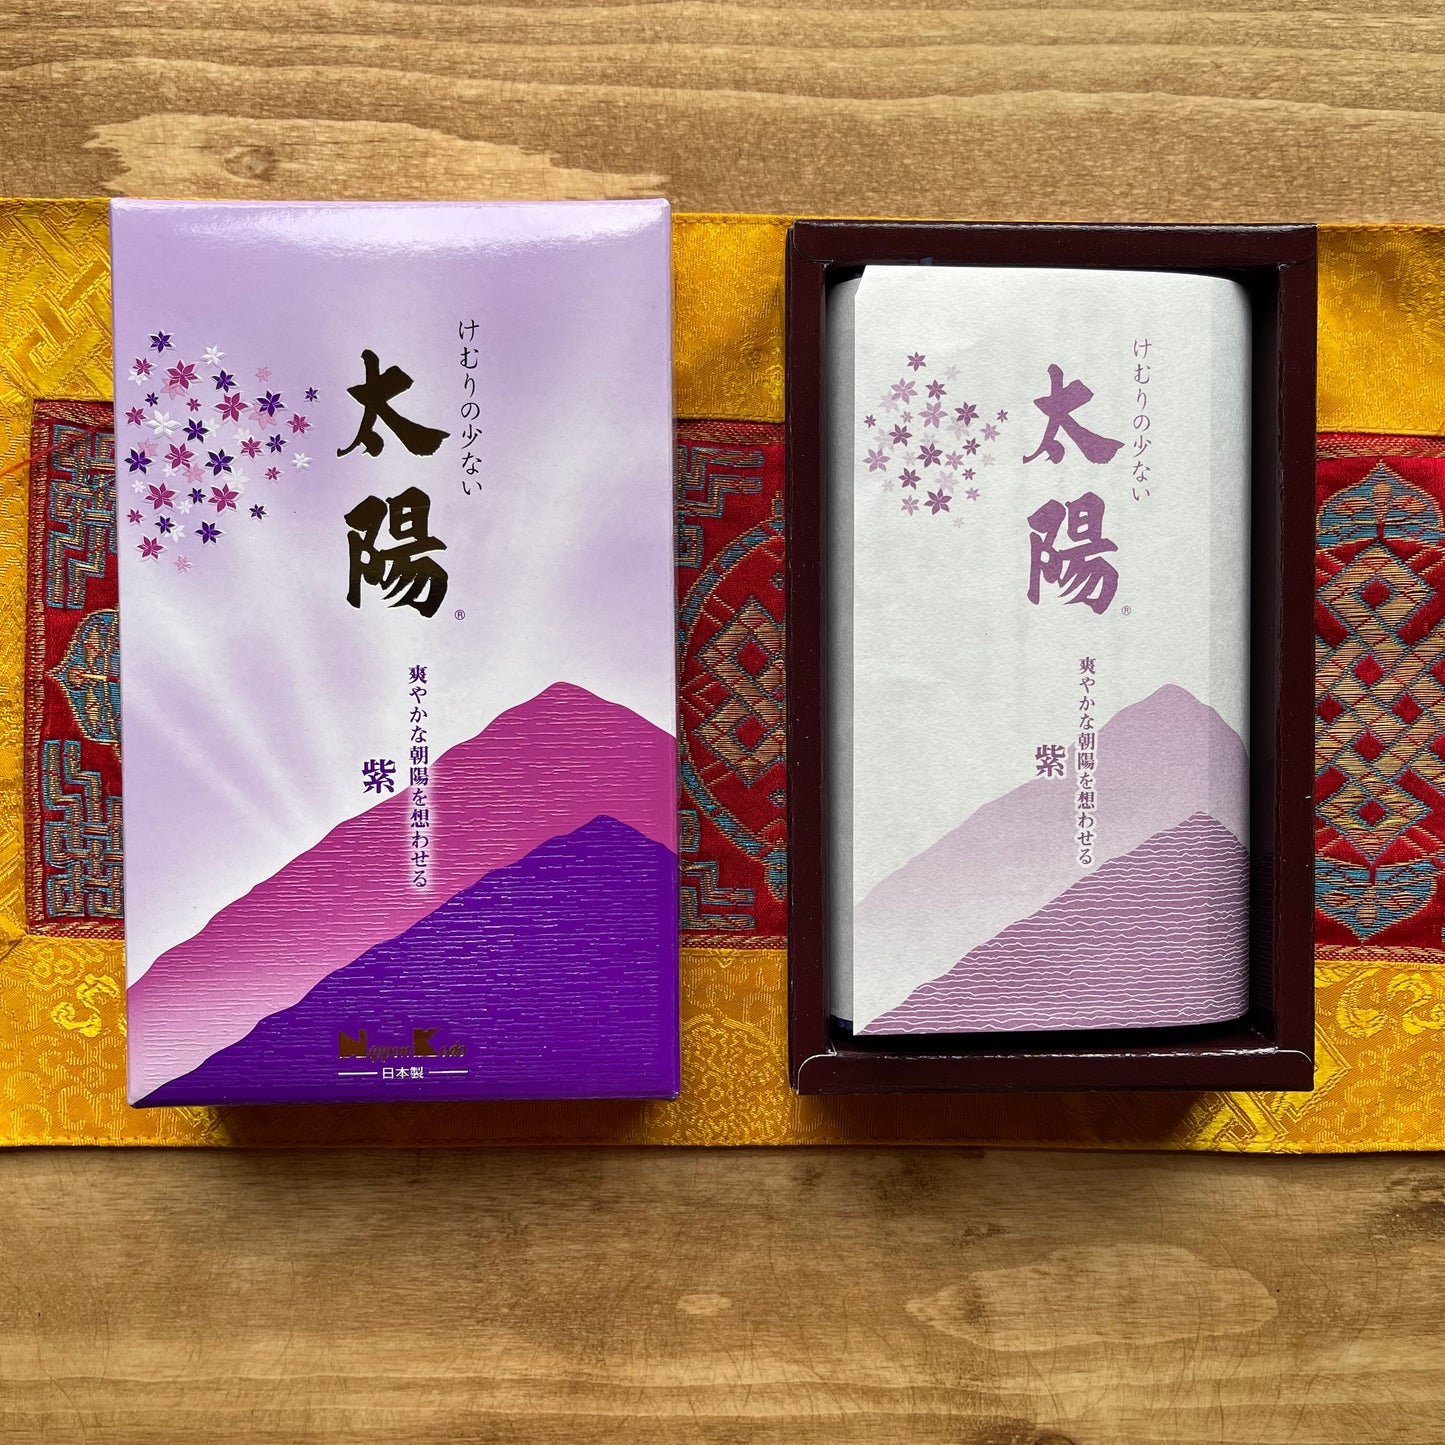 Taiyo Floral Incense (380 Sticks) | Nippon Kodo Incense sticks floral